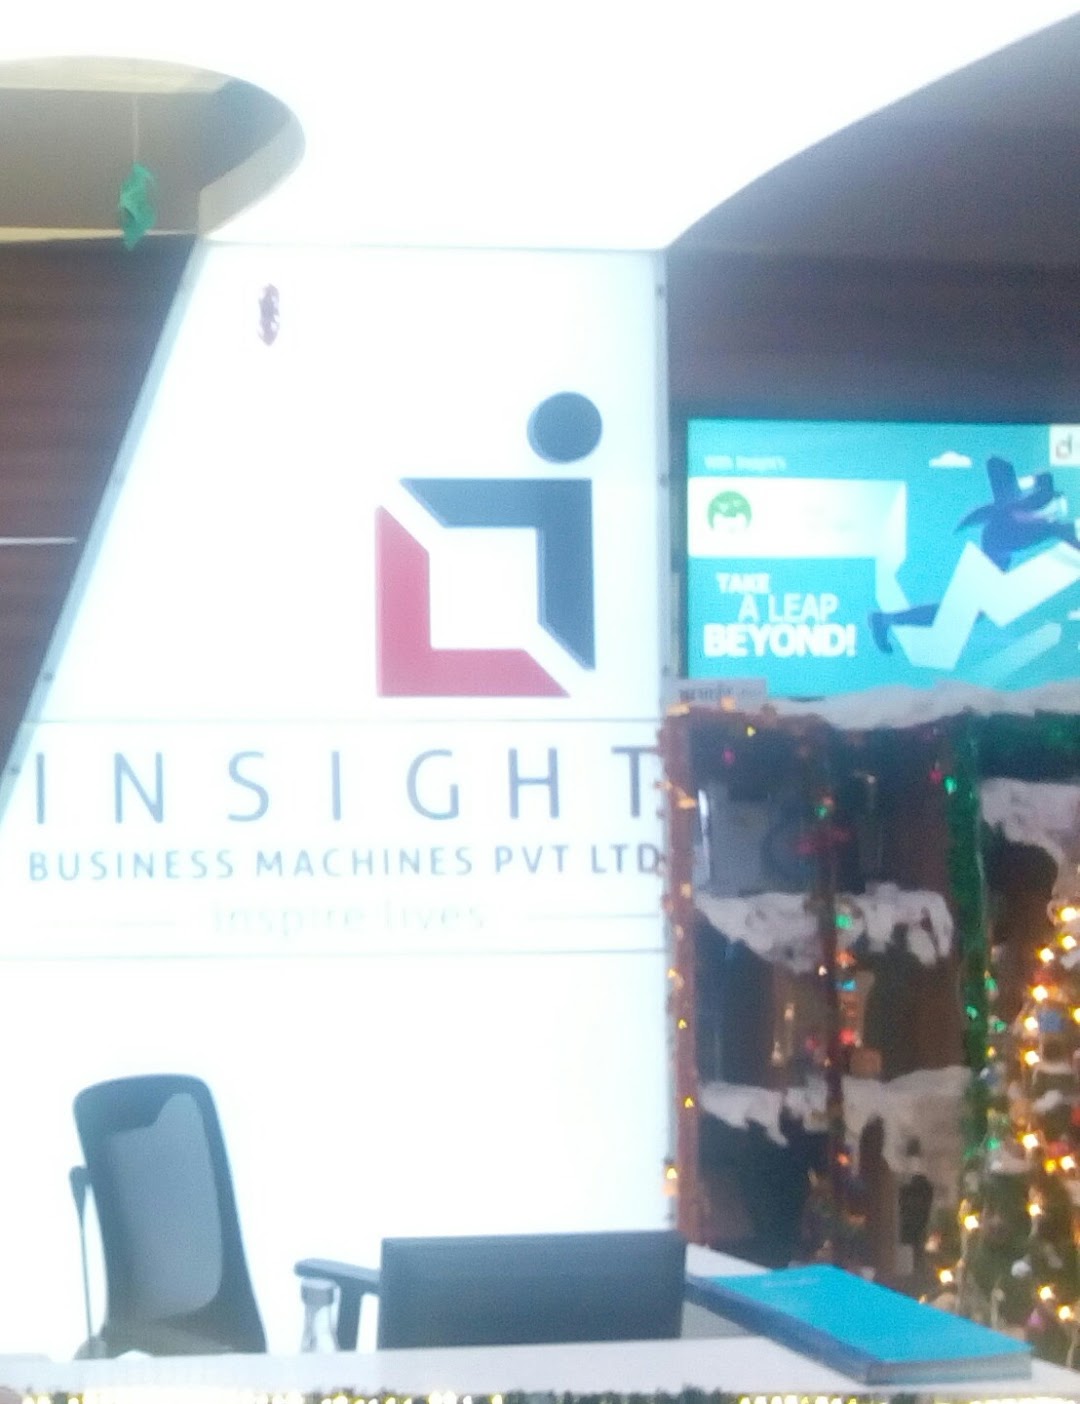 Insight Business Machines P Ltd